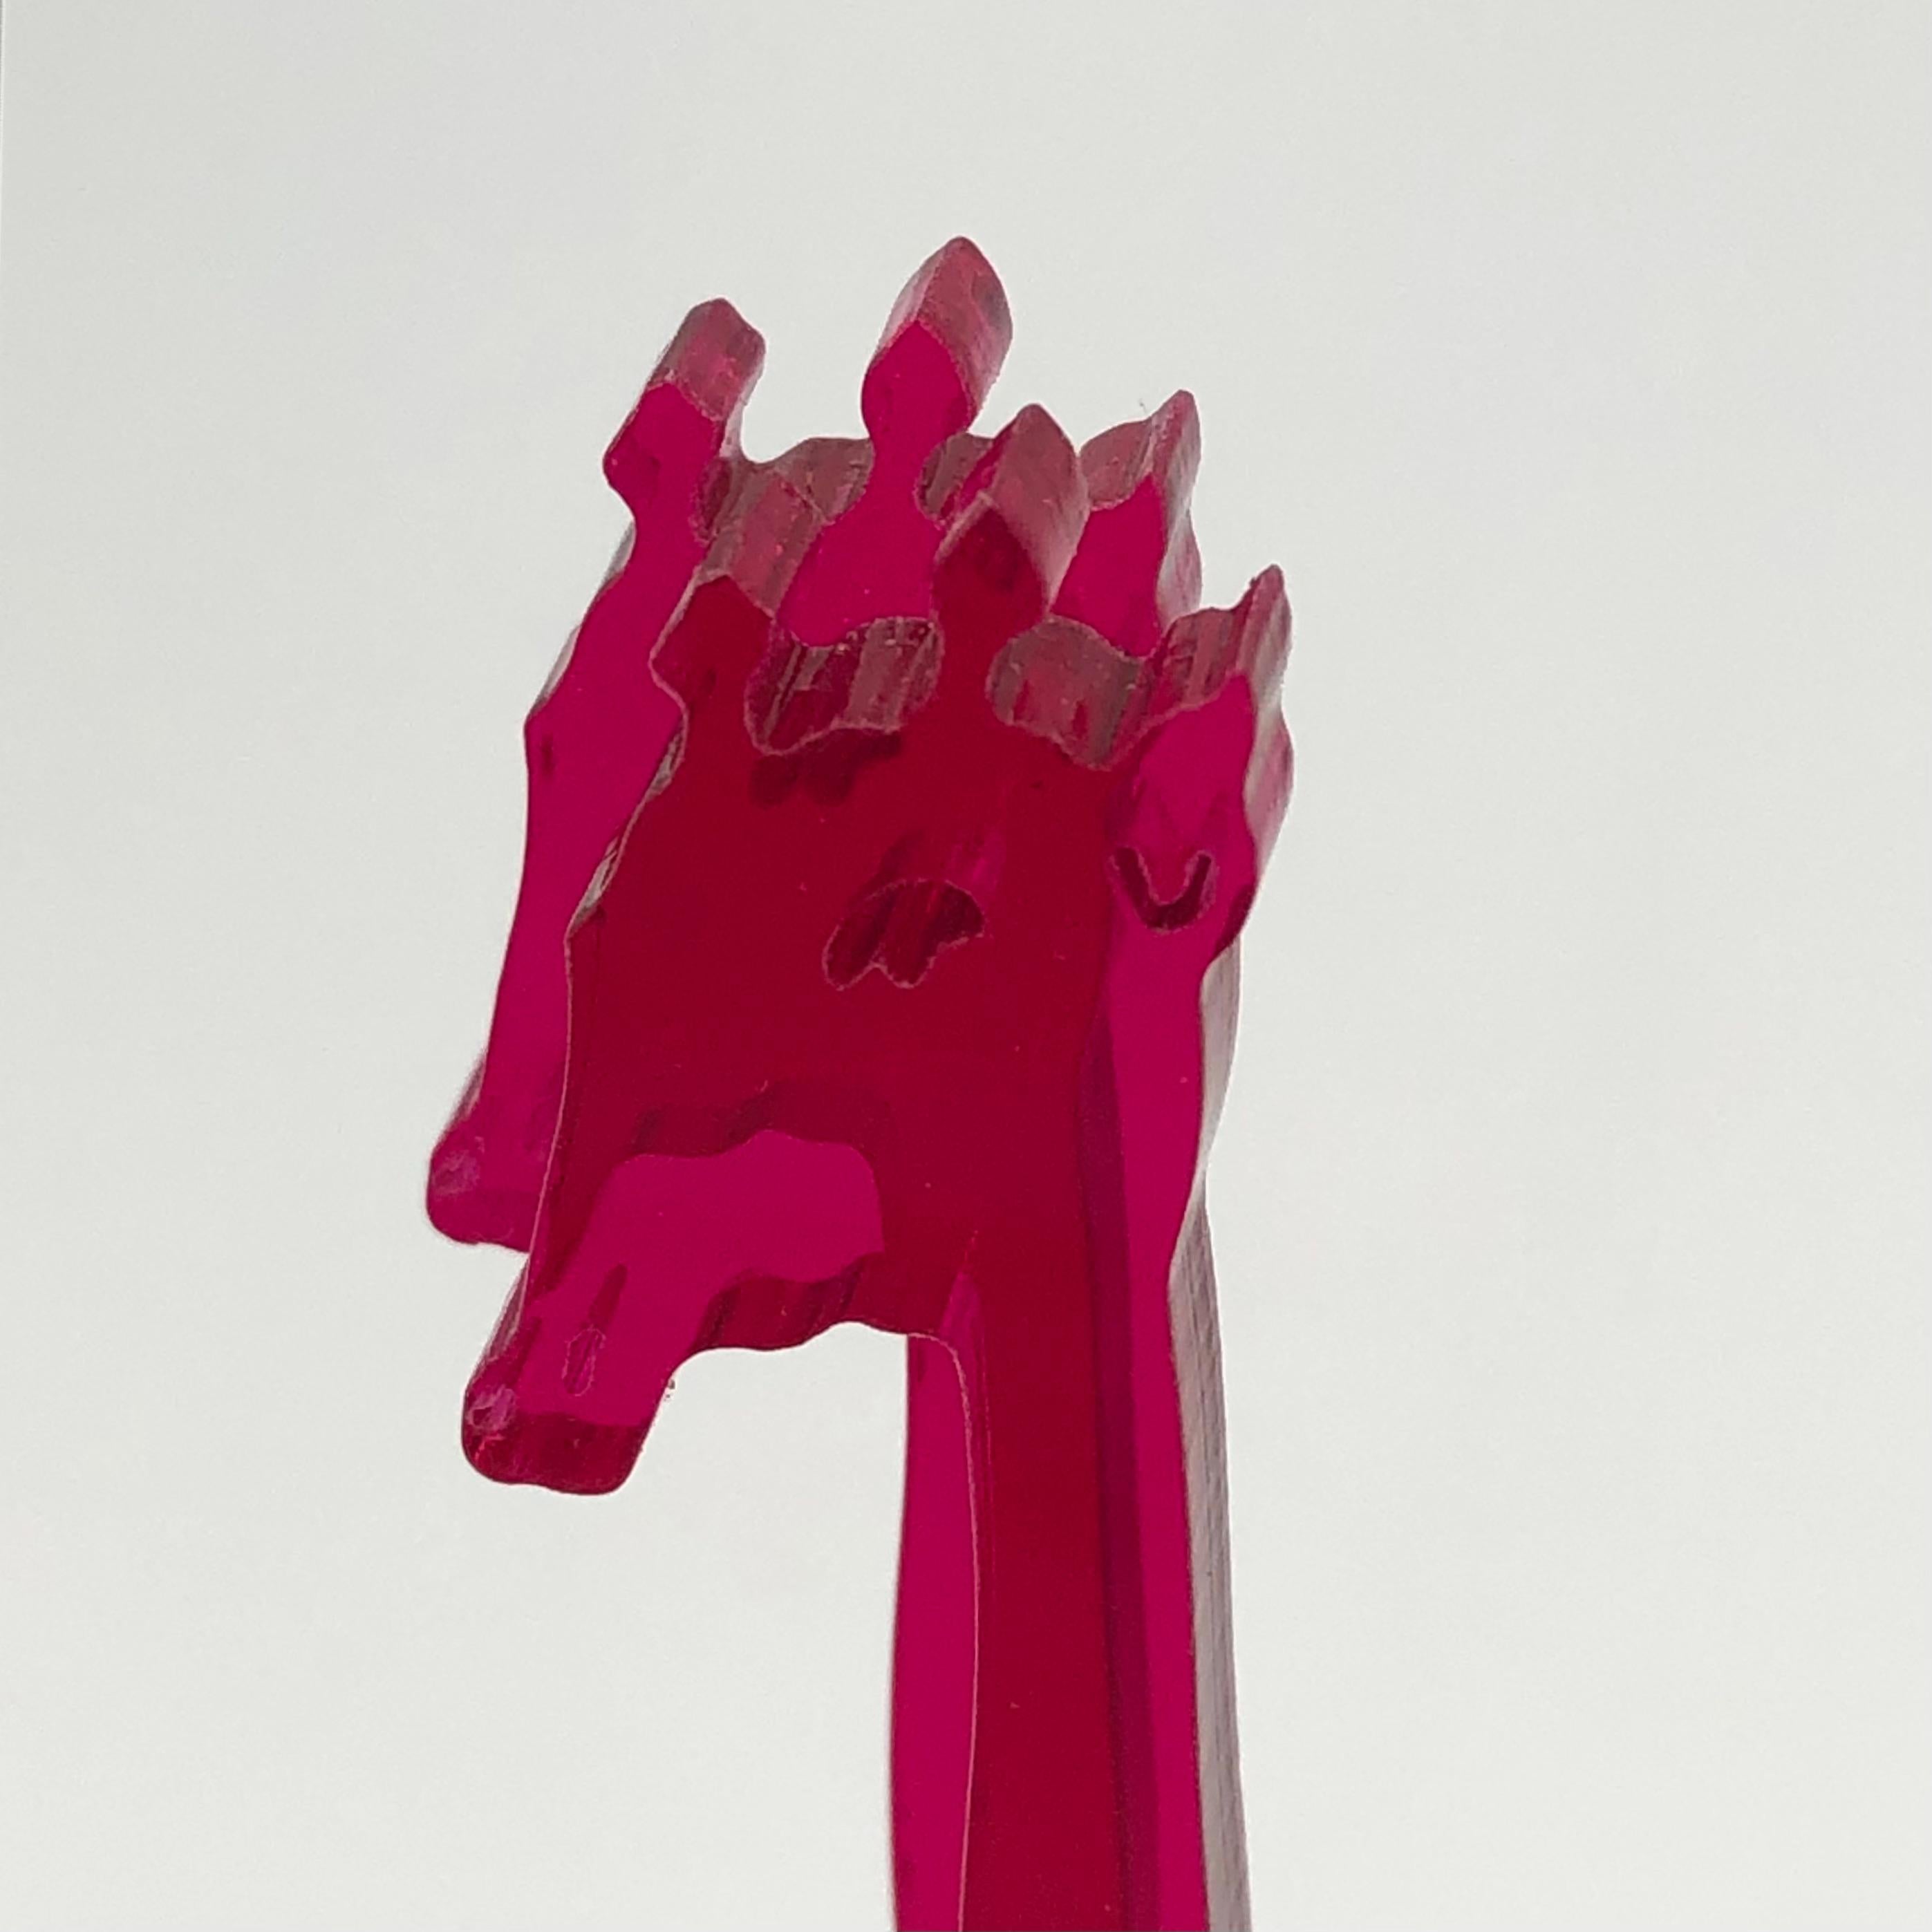 Autre Gino MAROTTA (1935-2012) Giraffa artificiel 2010 en vente